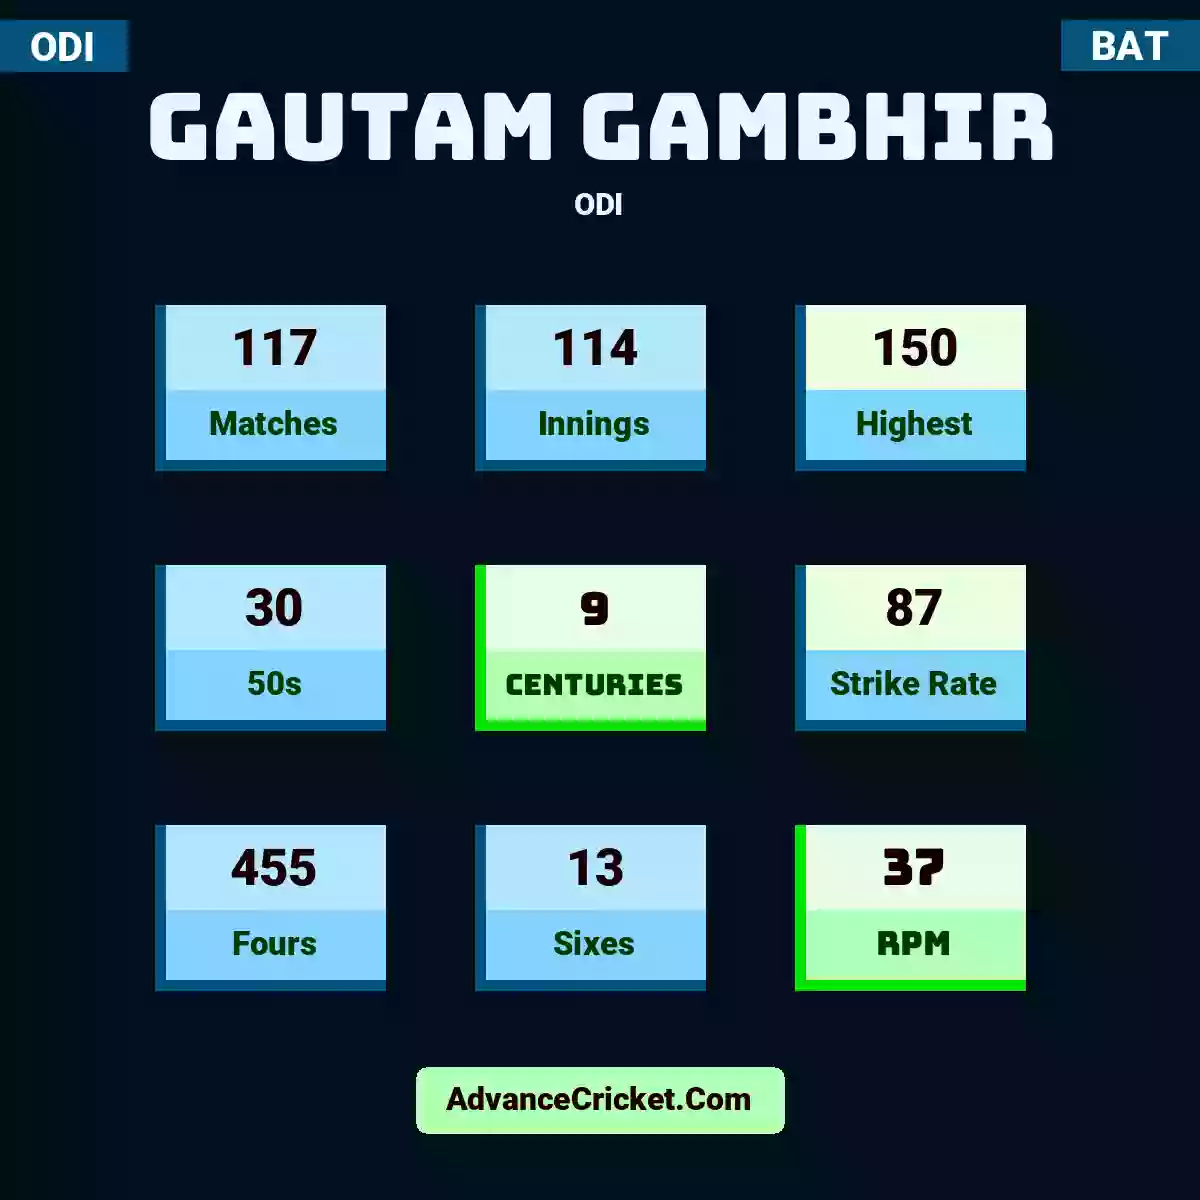 Gautam Gambhir ODI , Gautam Gambhir played 117 matches, scored 150 runs as highest, 30 half-centuries, and 9 centuries, with a strike rate of 87. G.Gambhir hit 455 fours and 13 sixes, with an RPM of 37.